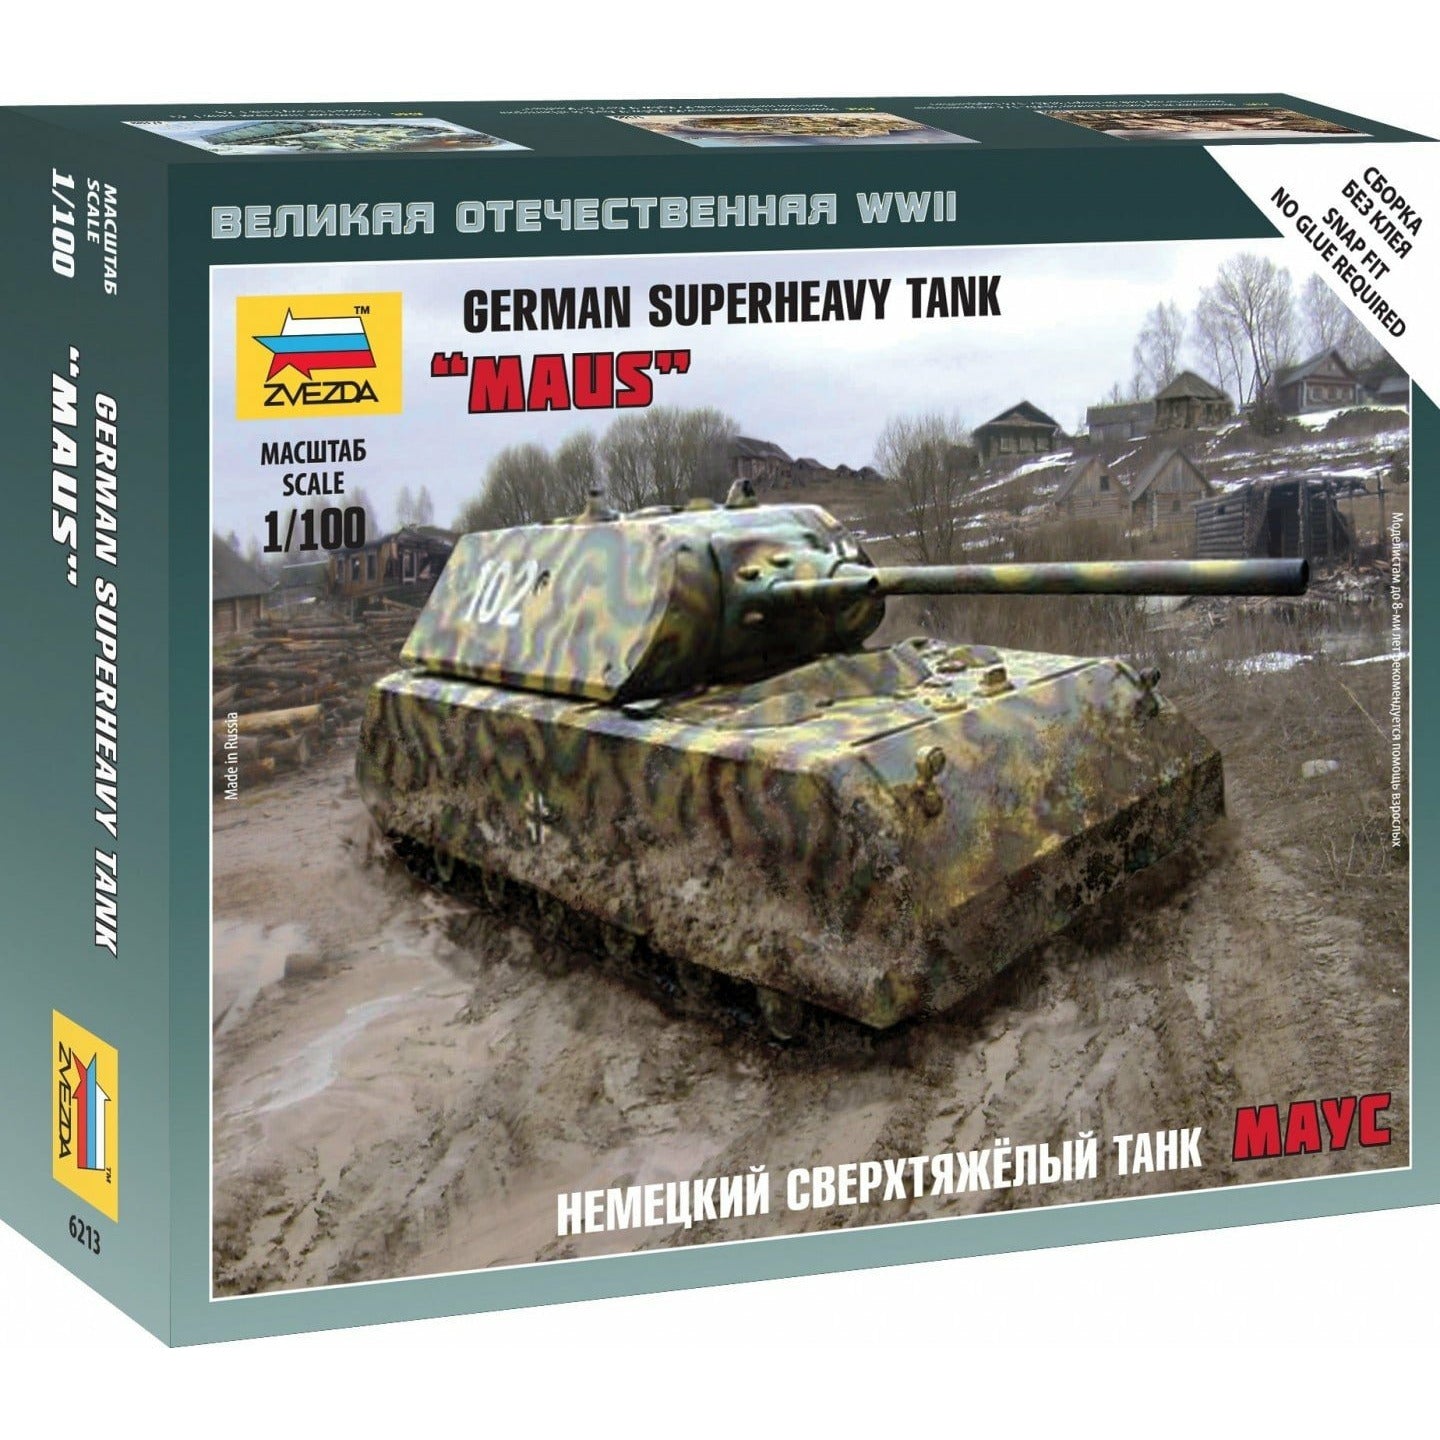 German Superheavy Tank "Maus" 1/100 #6213 by Zvezda